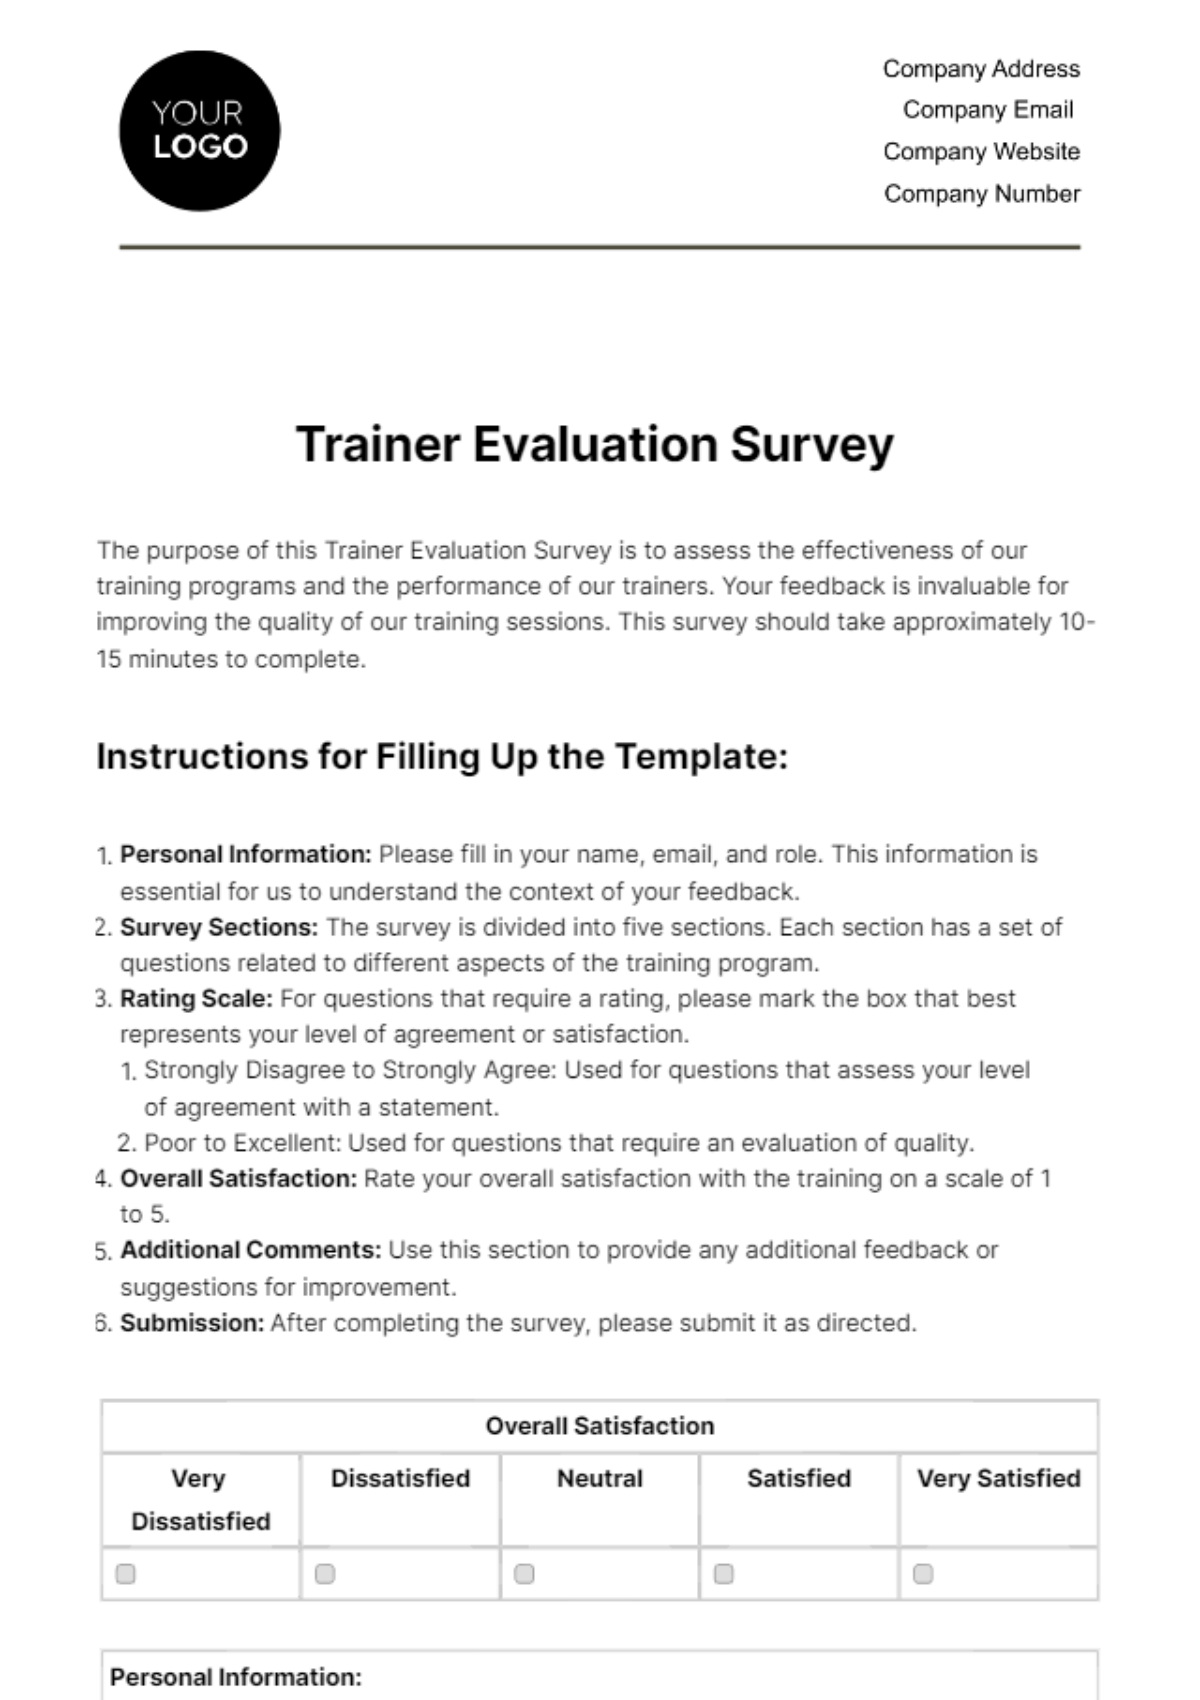 Trainer Evaluation Survey HR Template